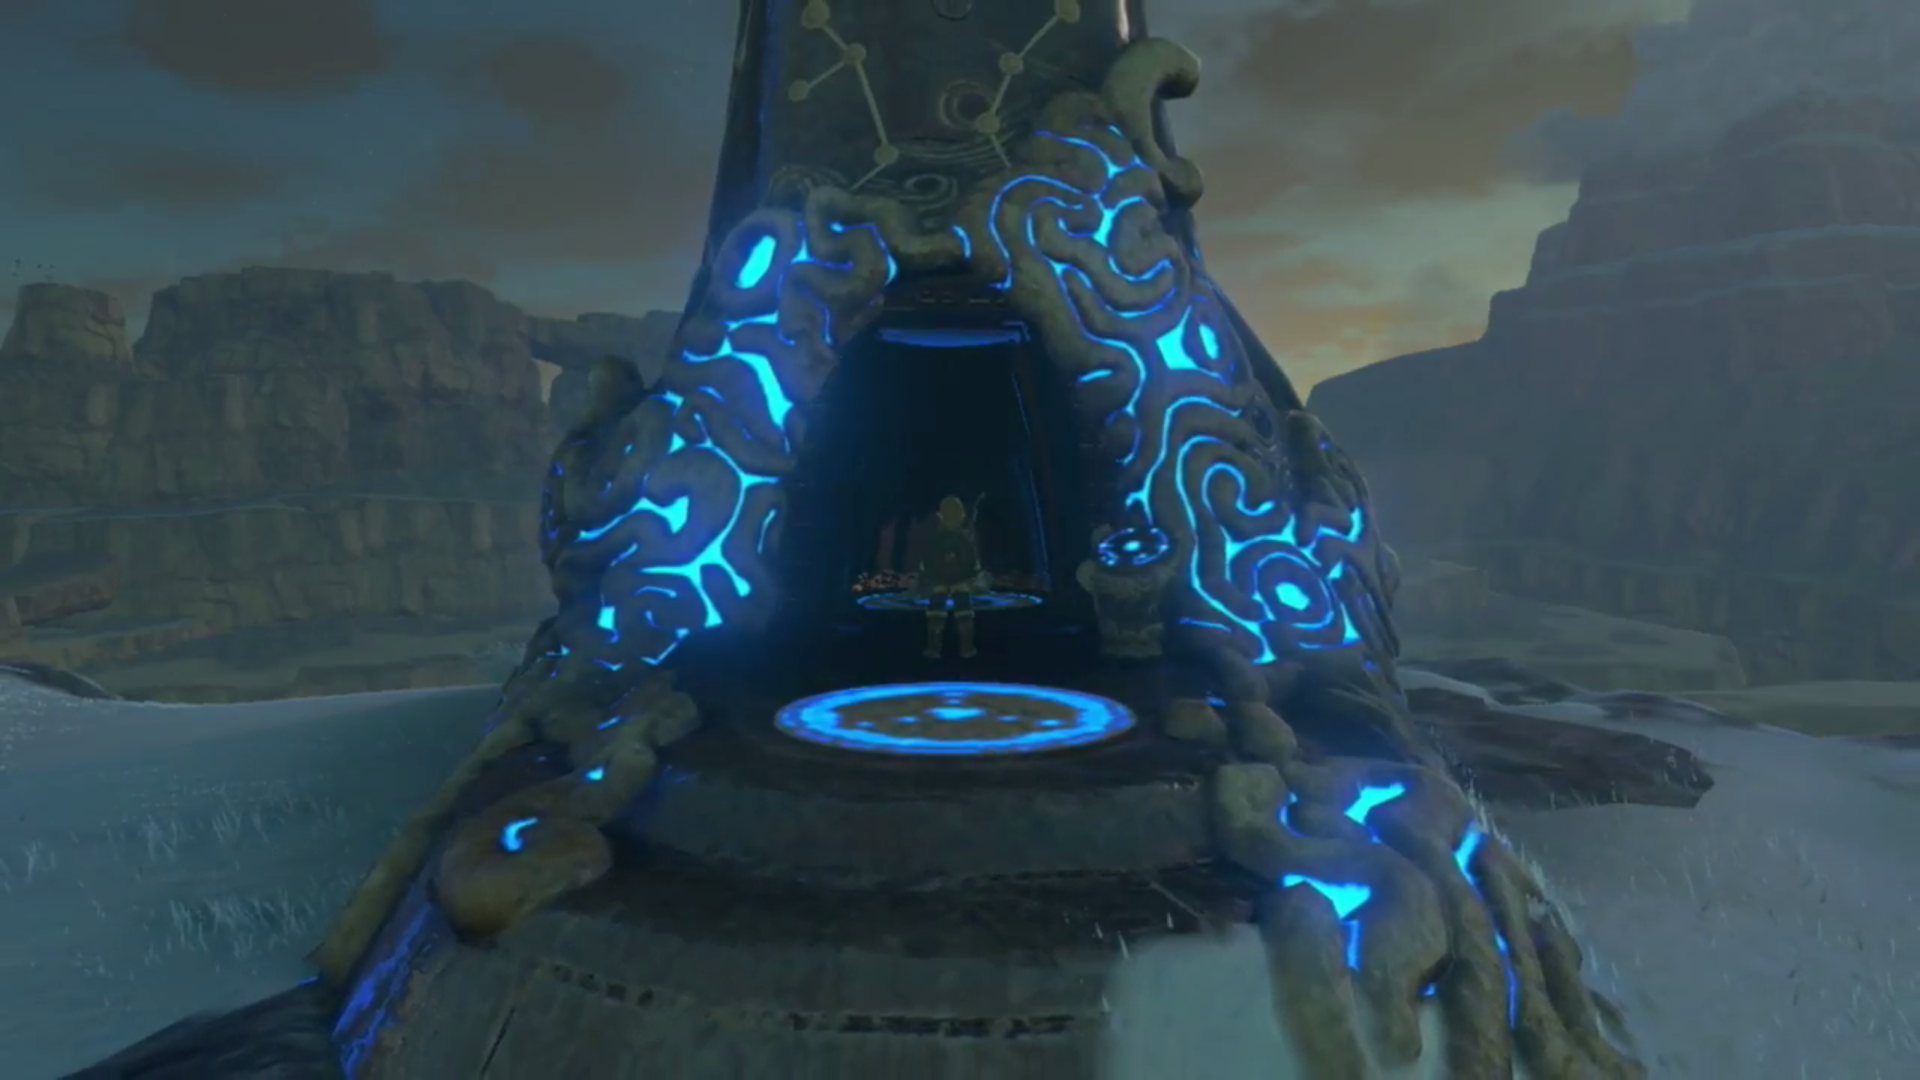 Kah Yah Shrine - Zelda Wiki